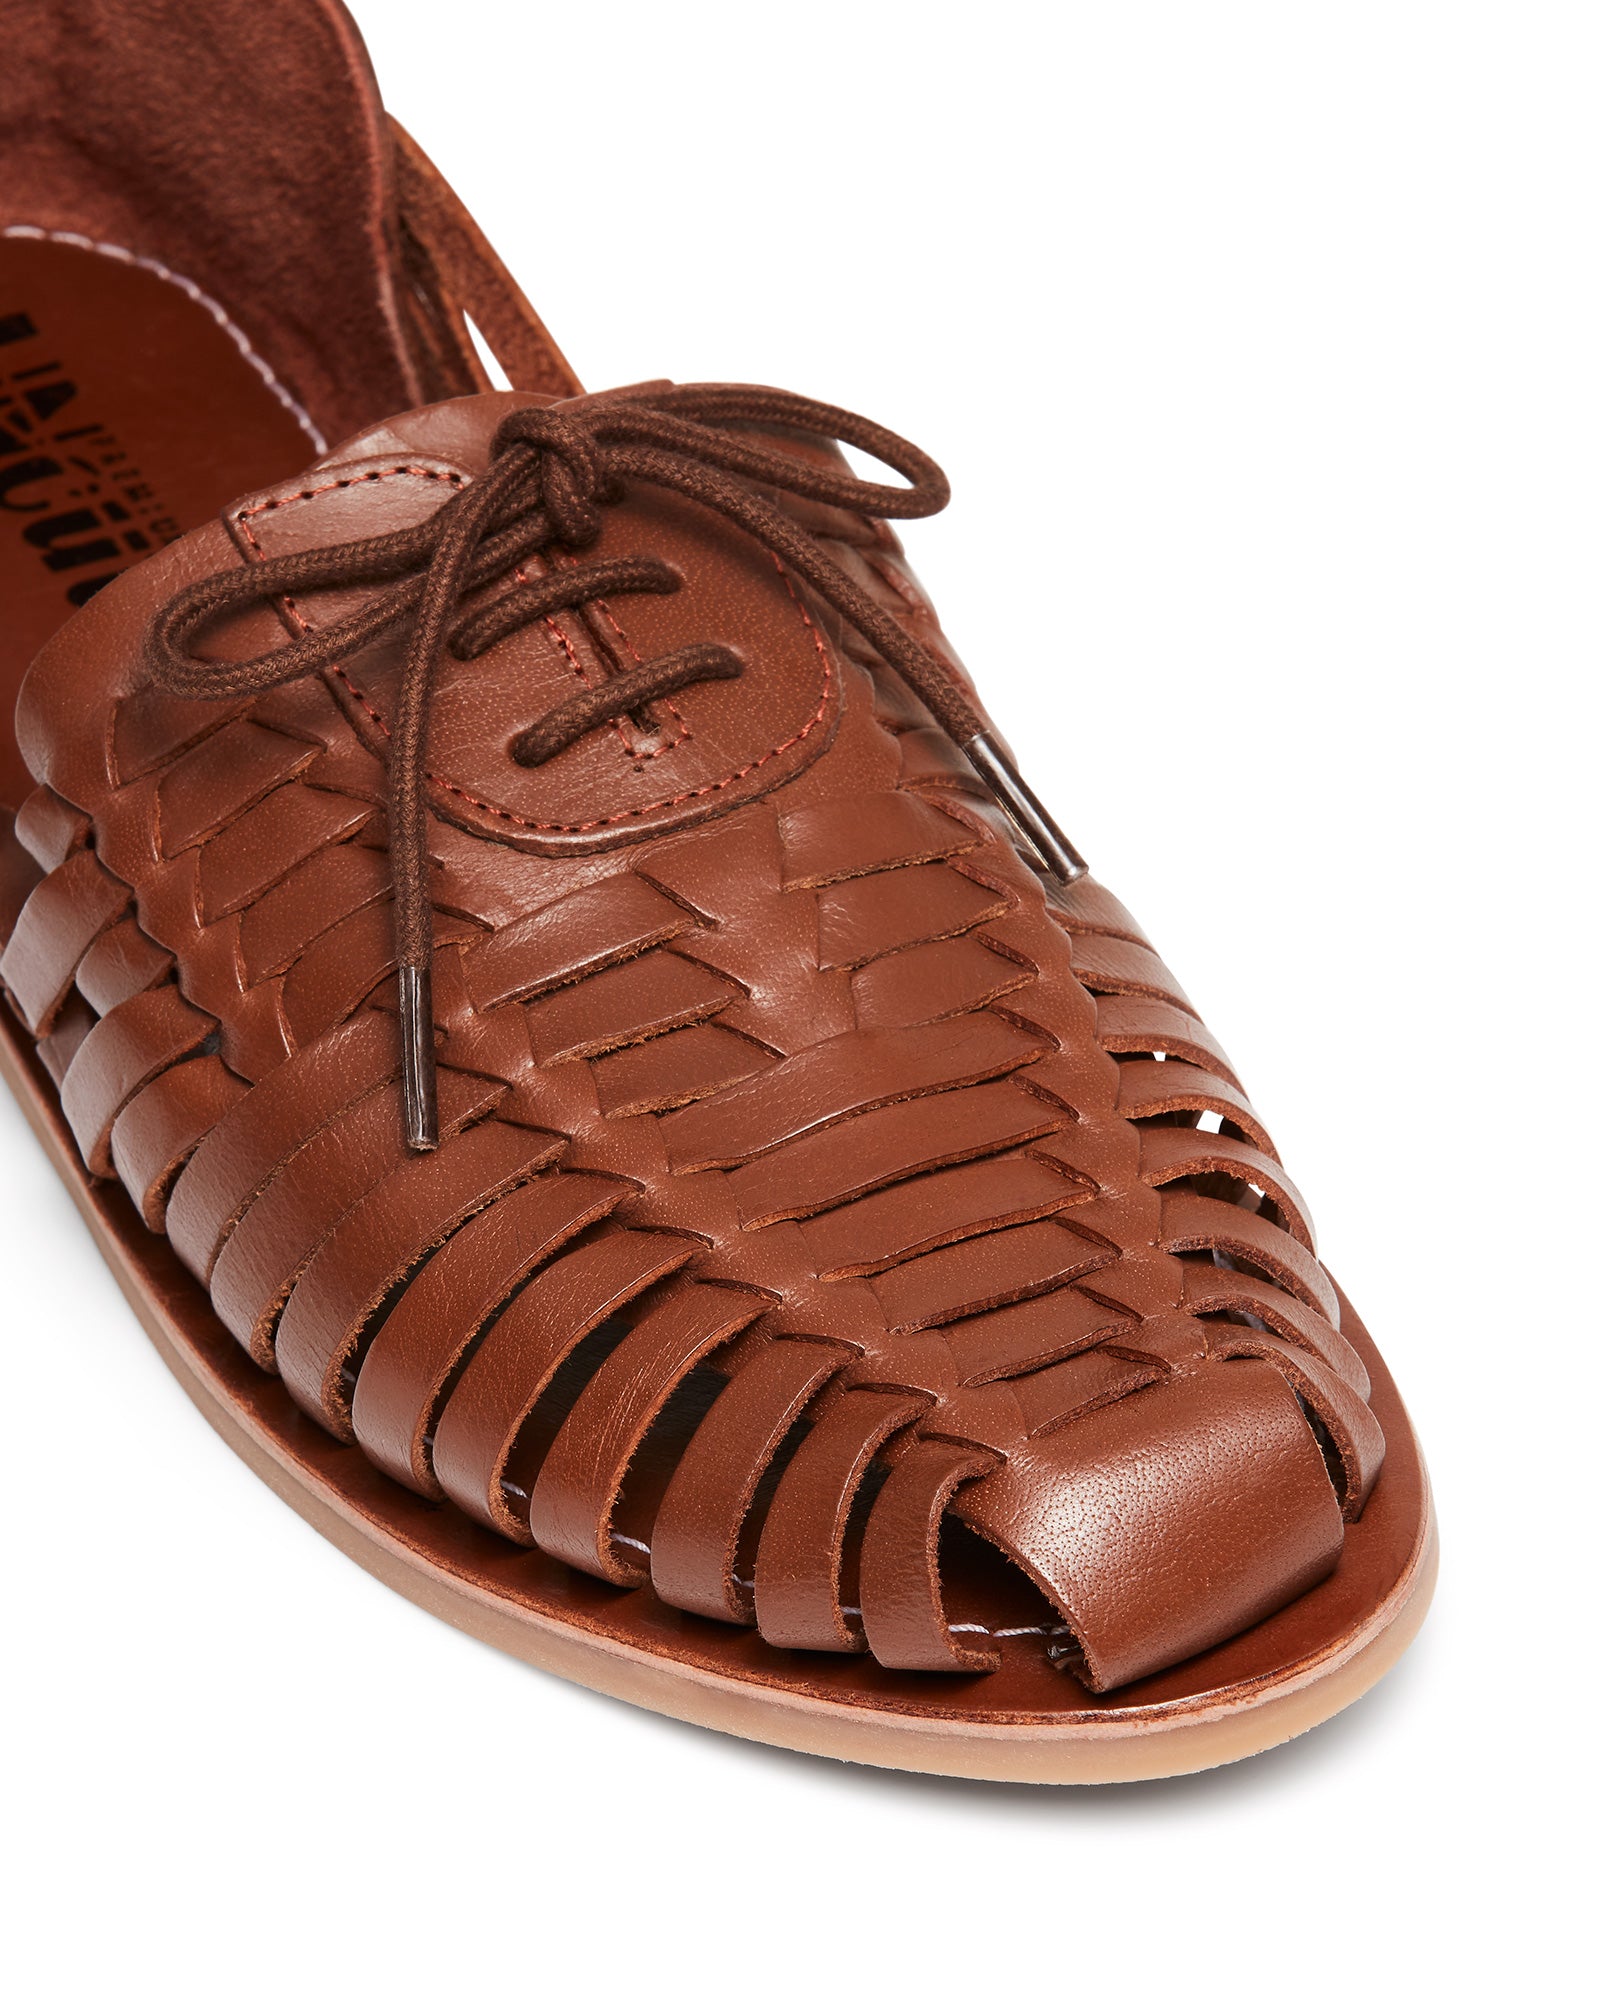 Womens ANA huarache sandal / Cream woven leather | Tops For Shoes